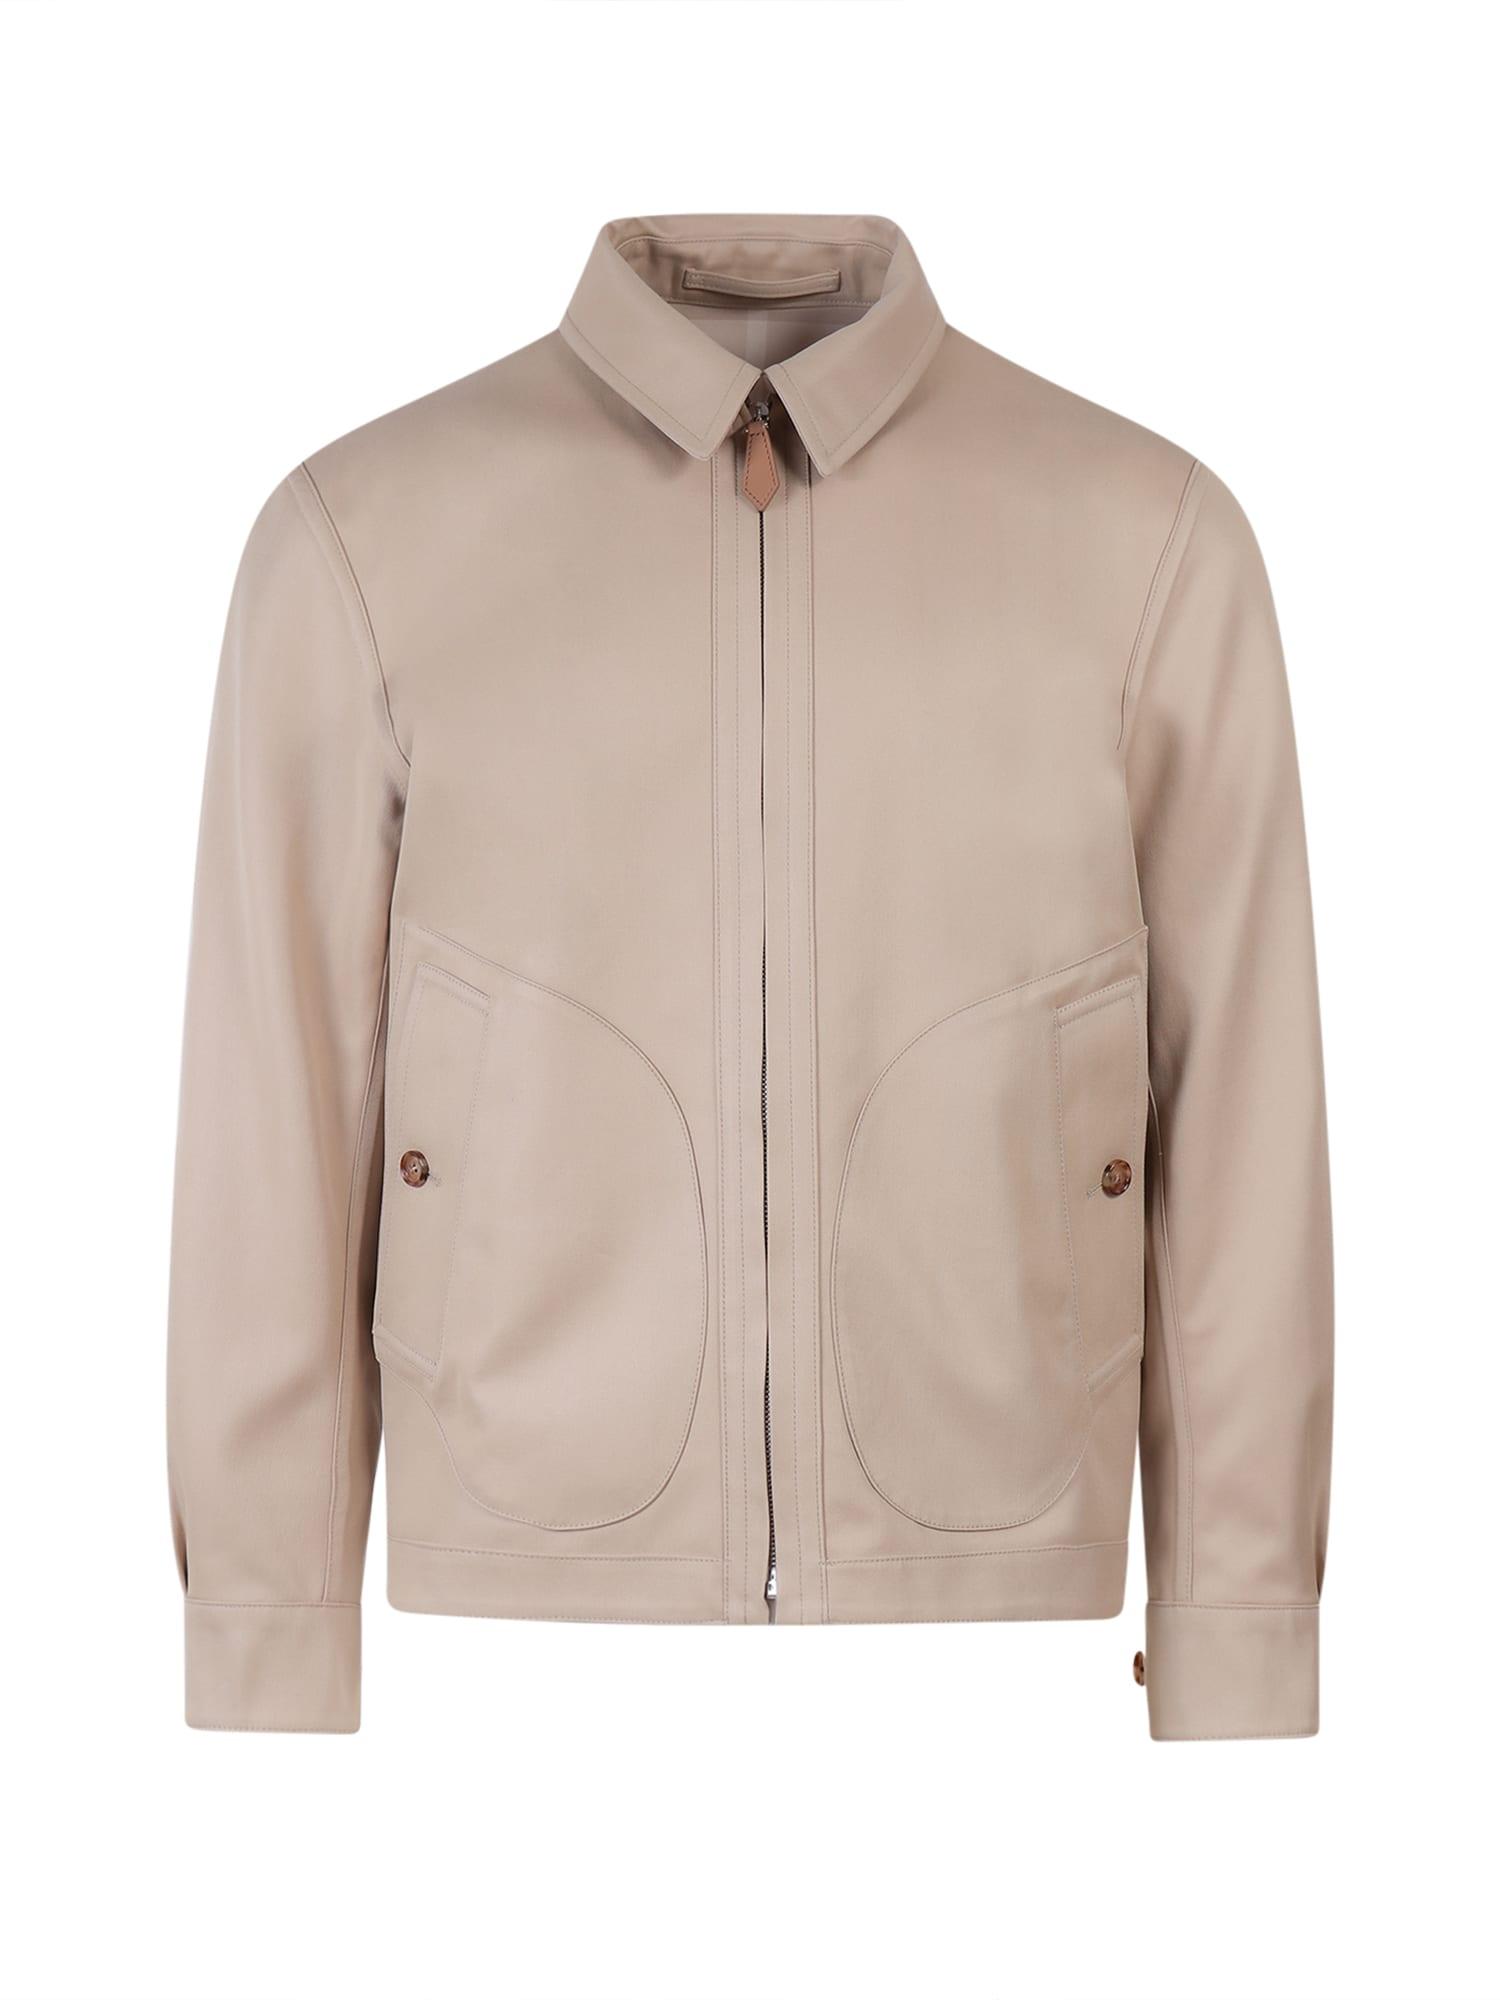 Burberry Cotton Harrington Jacket in Beige (Natural) for Men - Save 6% |  Lyst